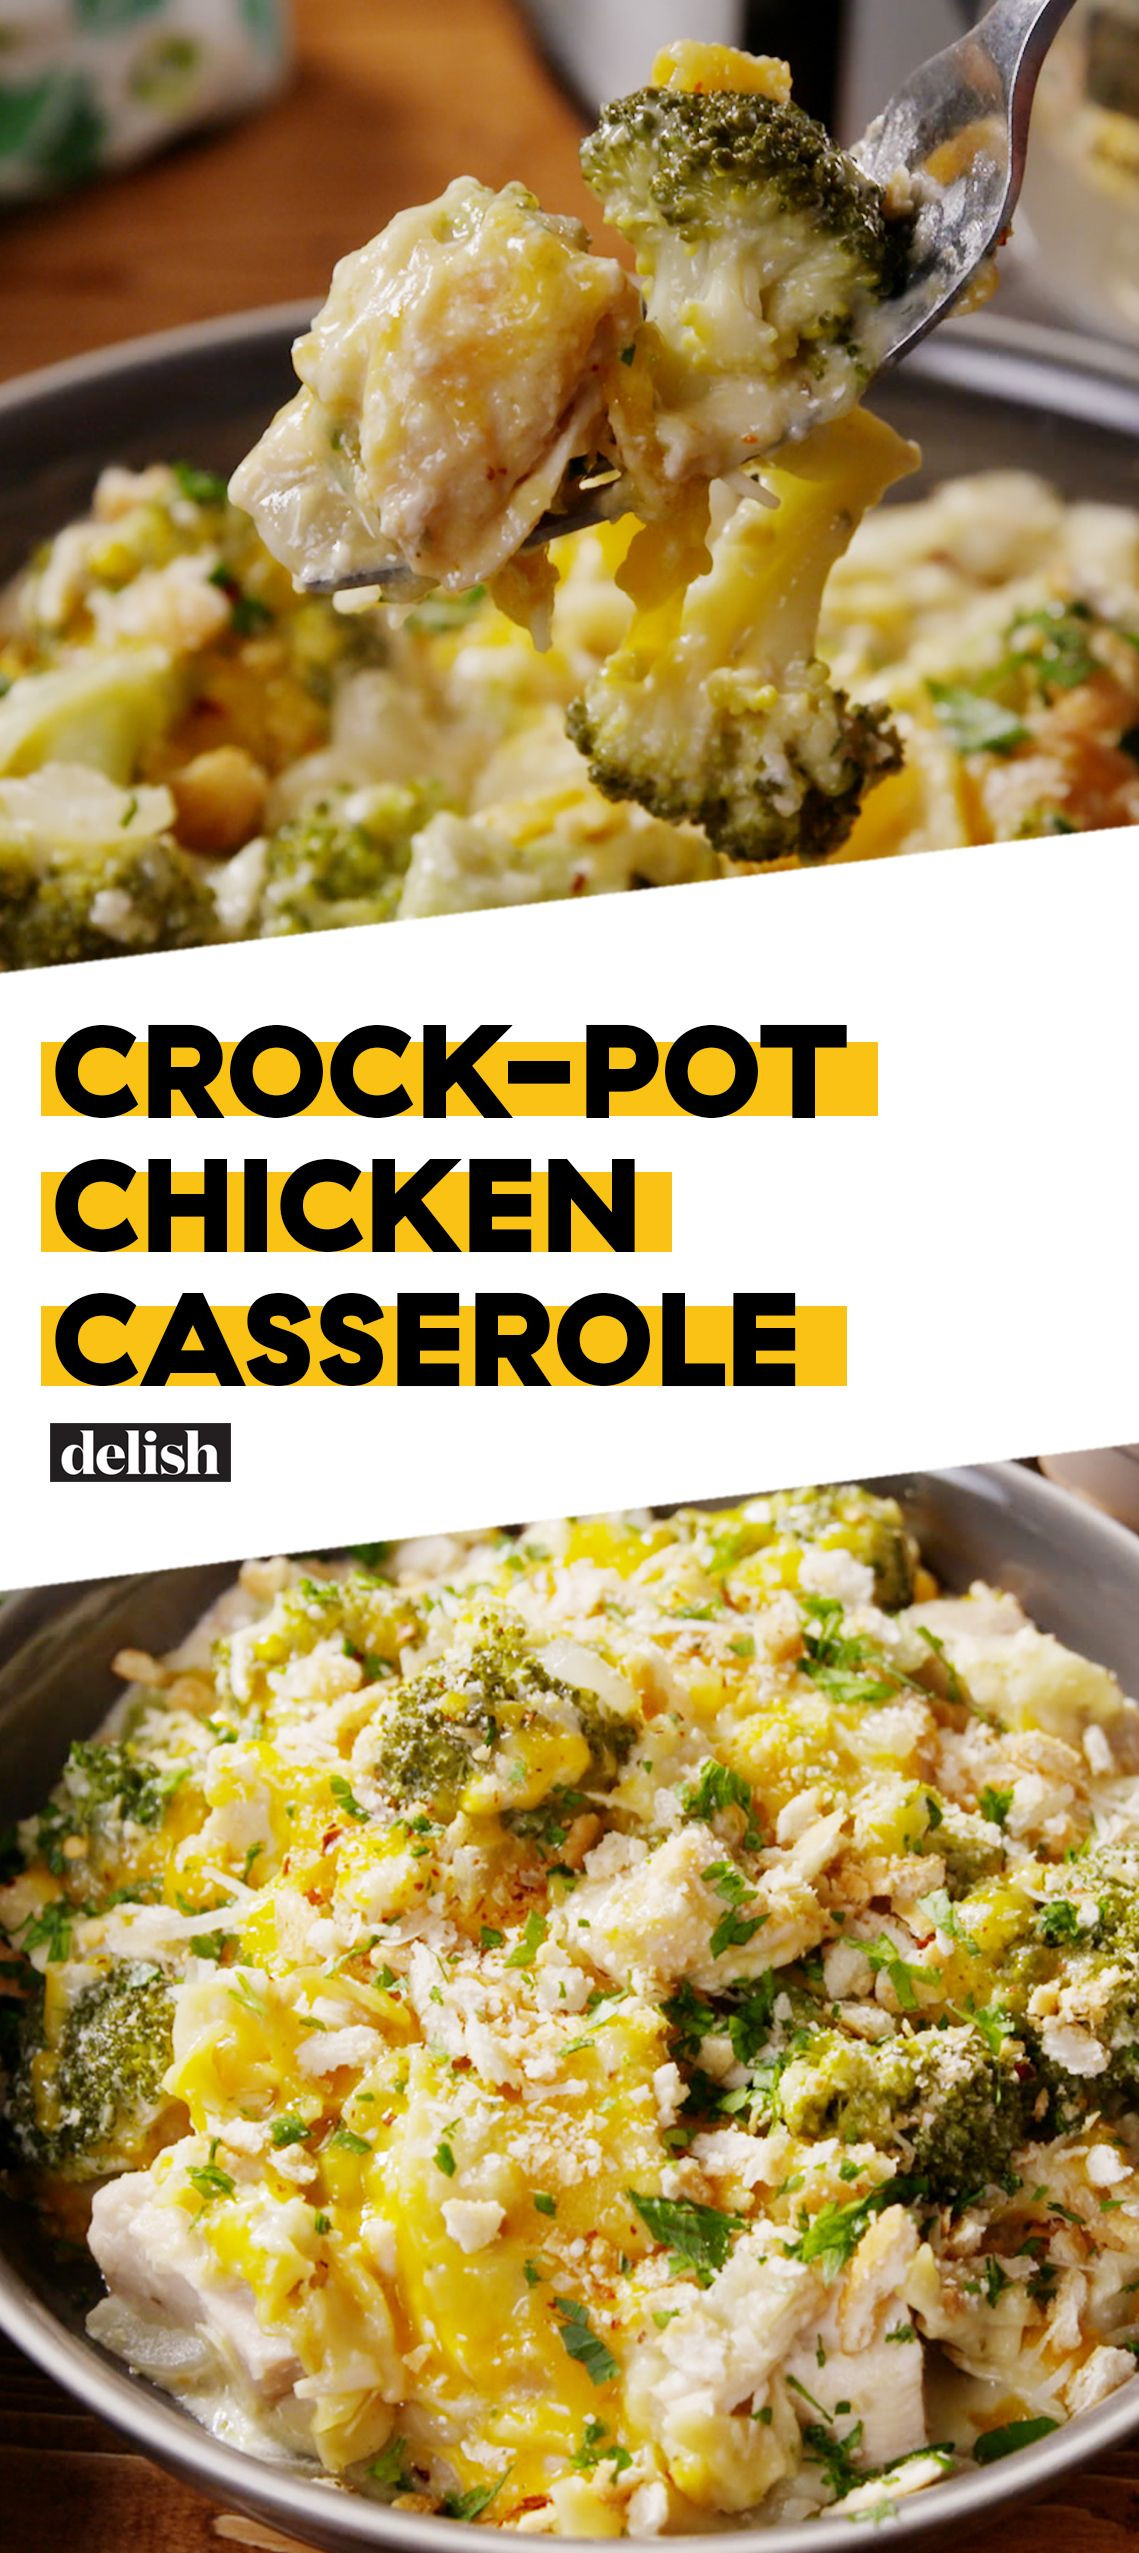 Crock Pot Chicken Casserole Recipe
 Crock Pot Broccoli Cheddar Chicken Casserole